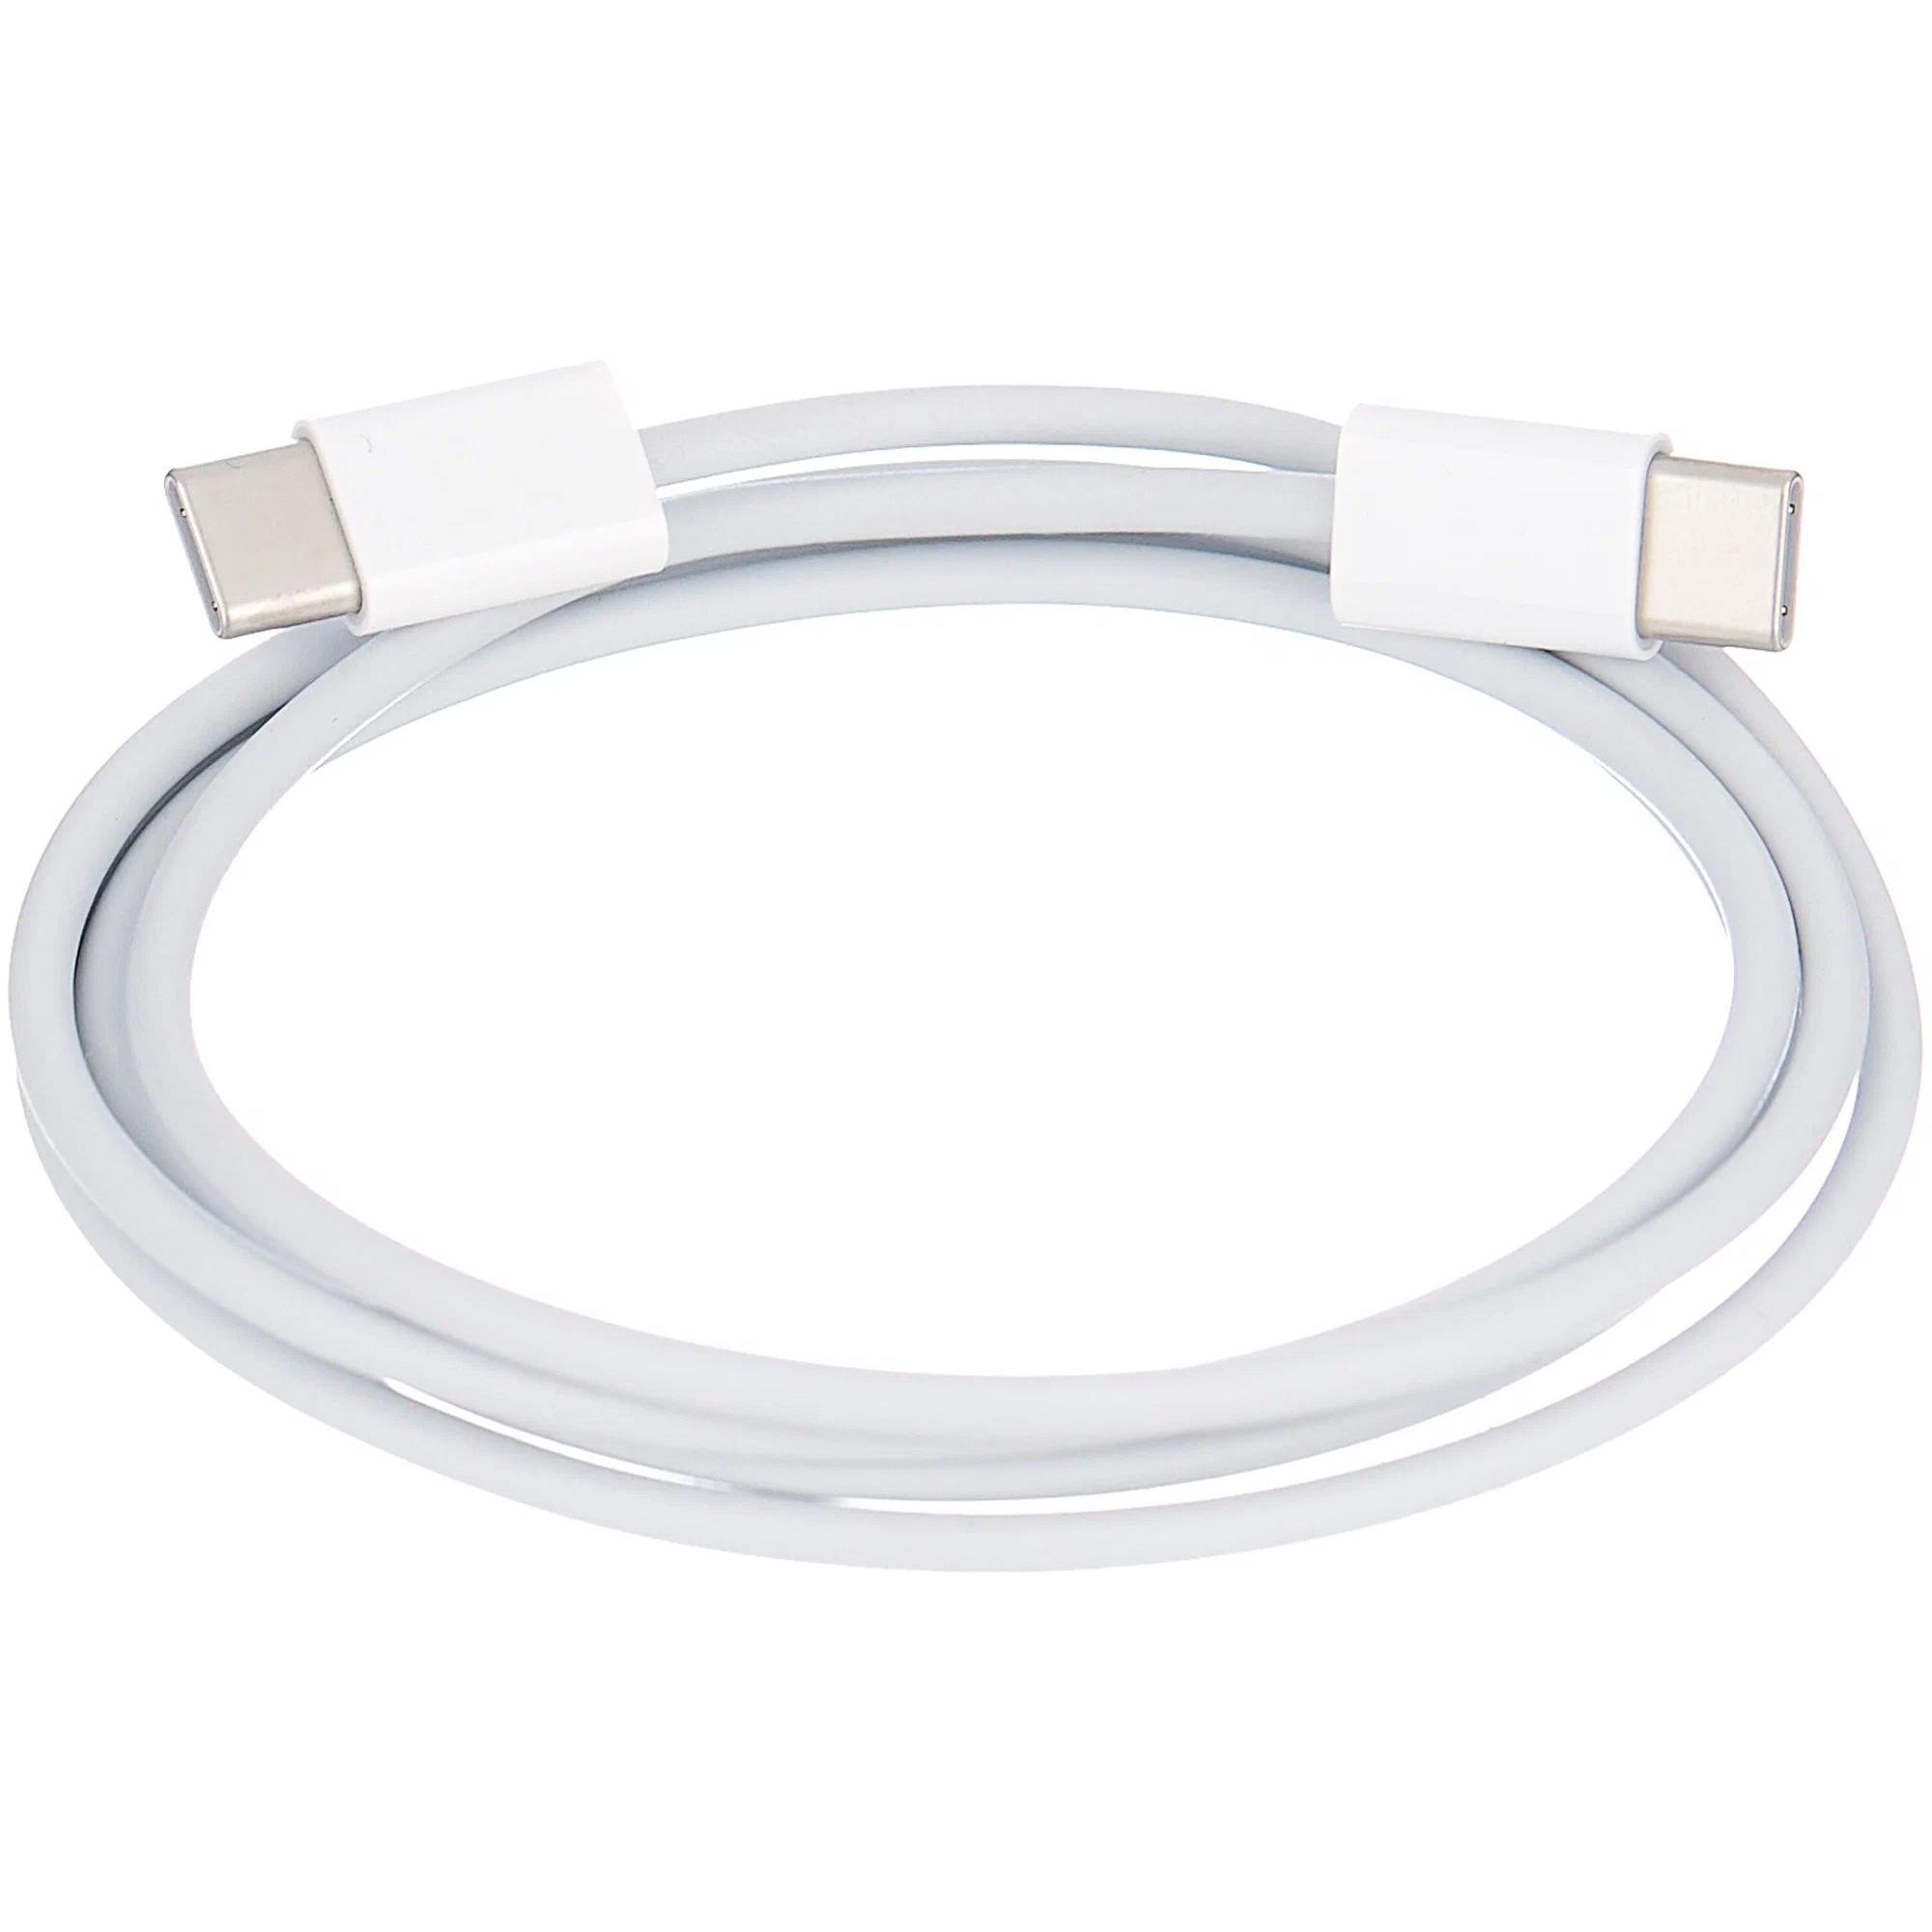 Кабель Apple USB-C Charge Cable (1m) MM093ZM/A чехол для ipad air 4 5 10 9 mini 5 6 2020 дюйма pro 11 дюймов ipad air 1 2 9 7 с держателем для карандашей